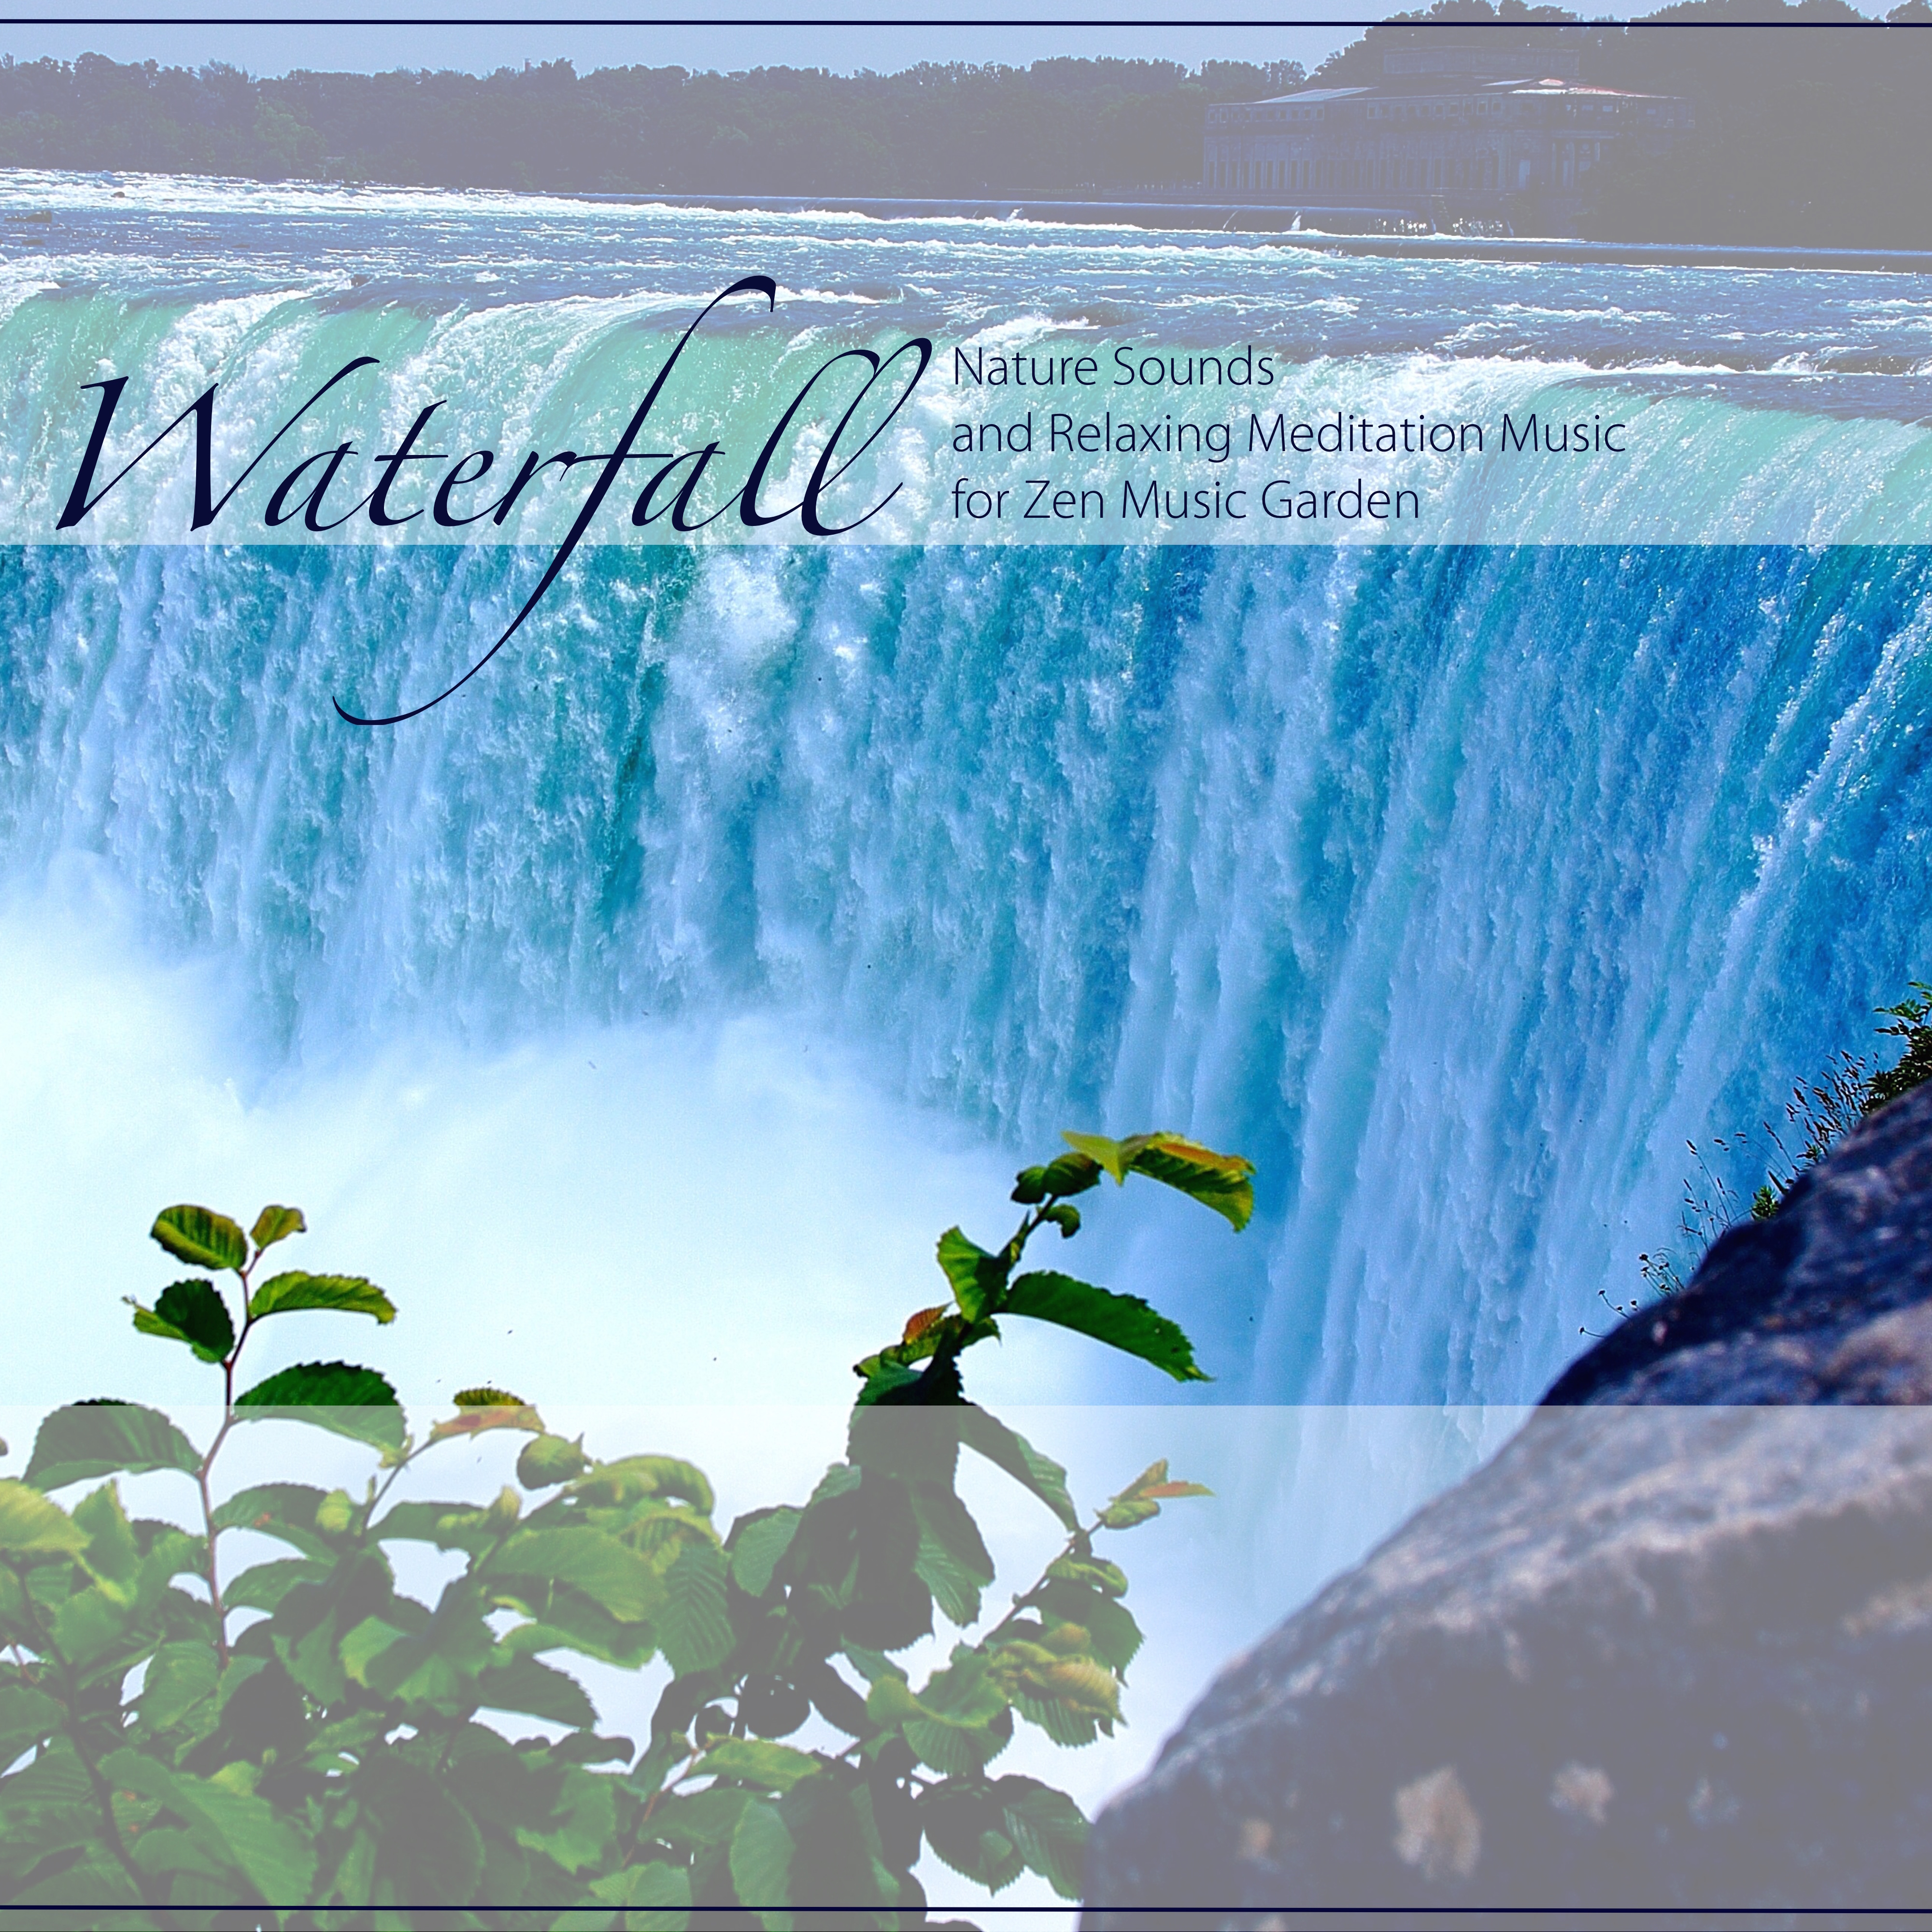 Waterfall - Nature Sounds and Relaxing Meditation Music for Zen Music Garden